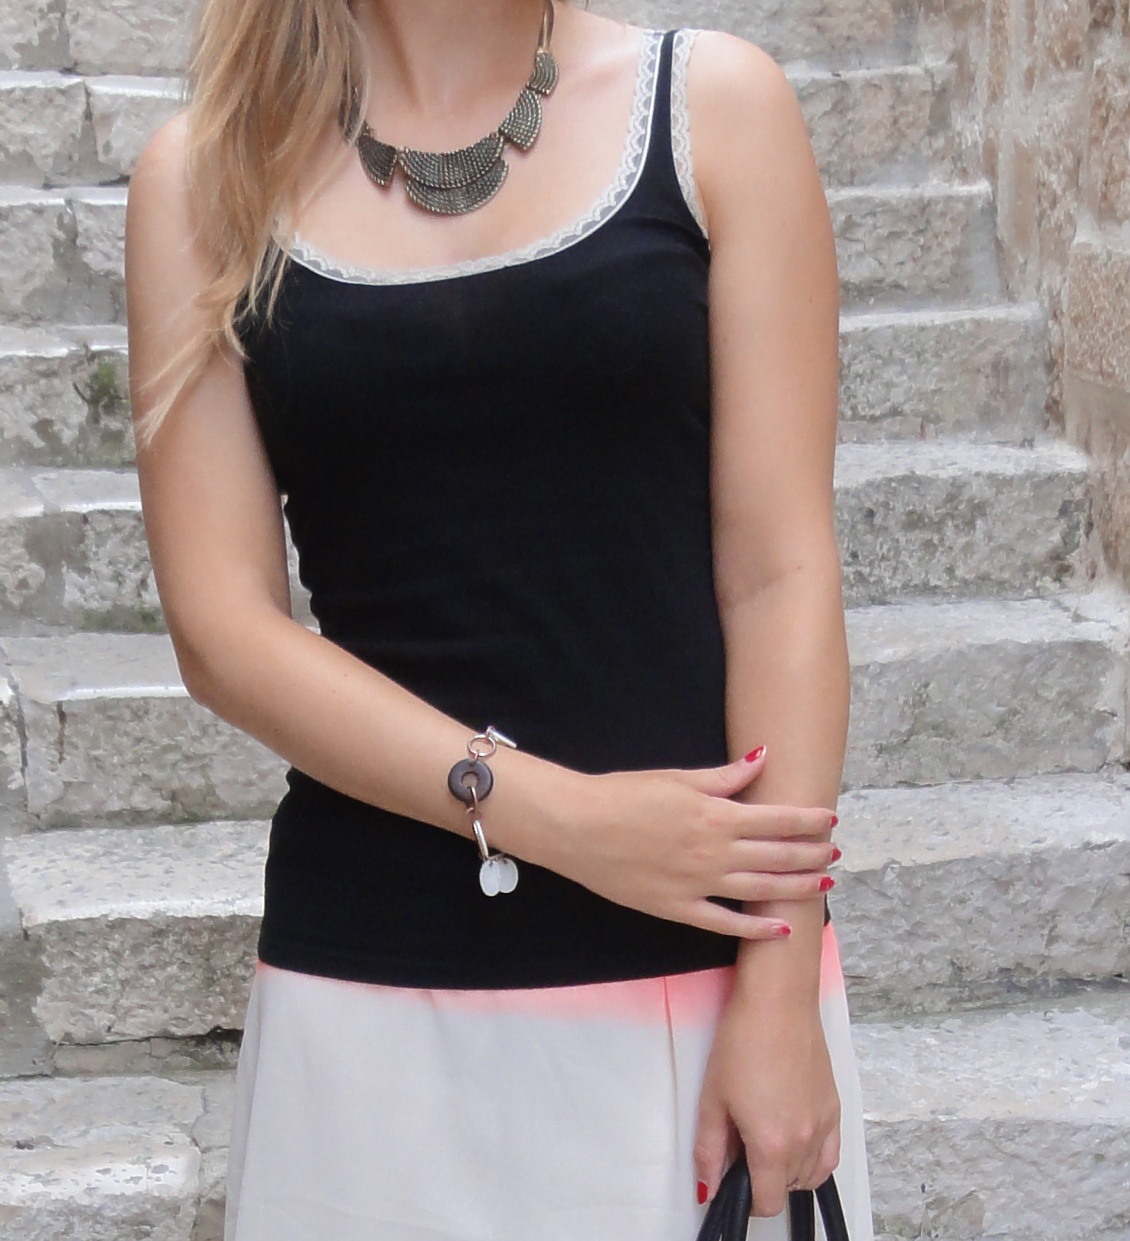 Mullet Skirt Vokuhila Rock kombinieren Sommeroutfit Fashion Look Dubrovnik Pilotensonnenbrille Modeblog Details schmuck